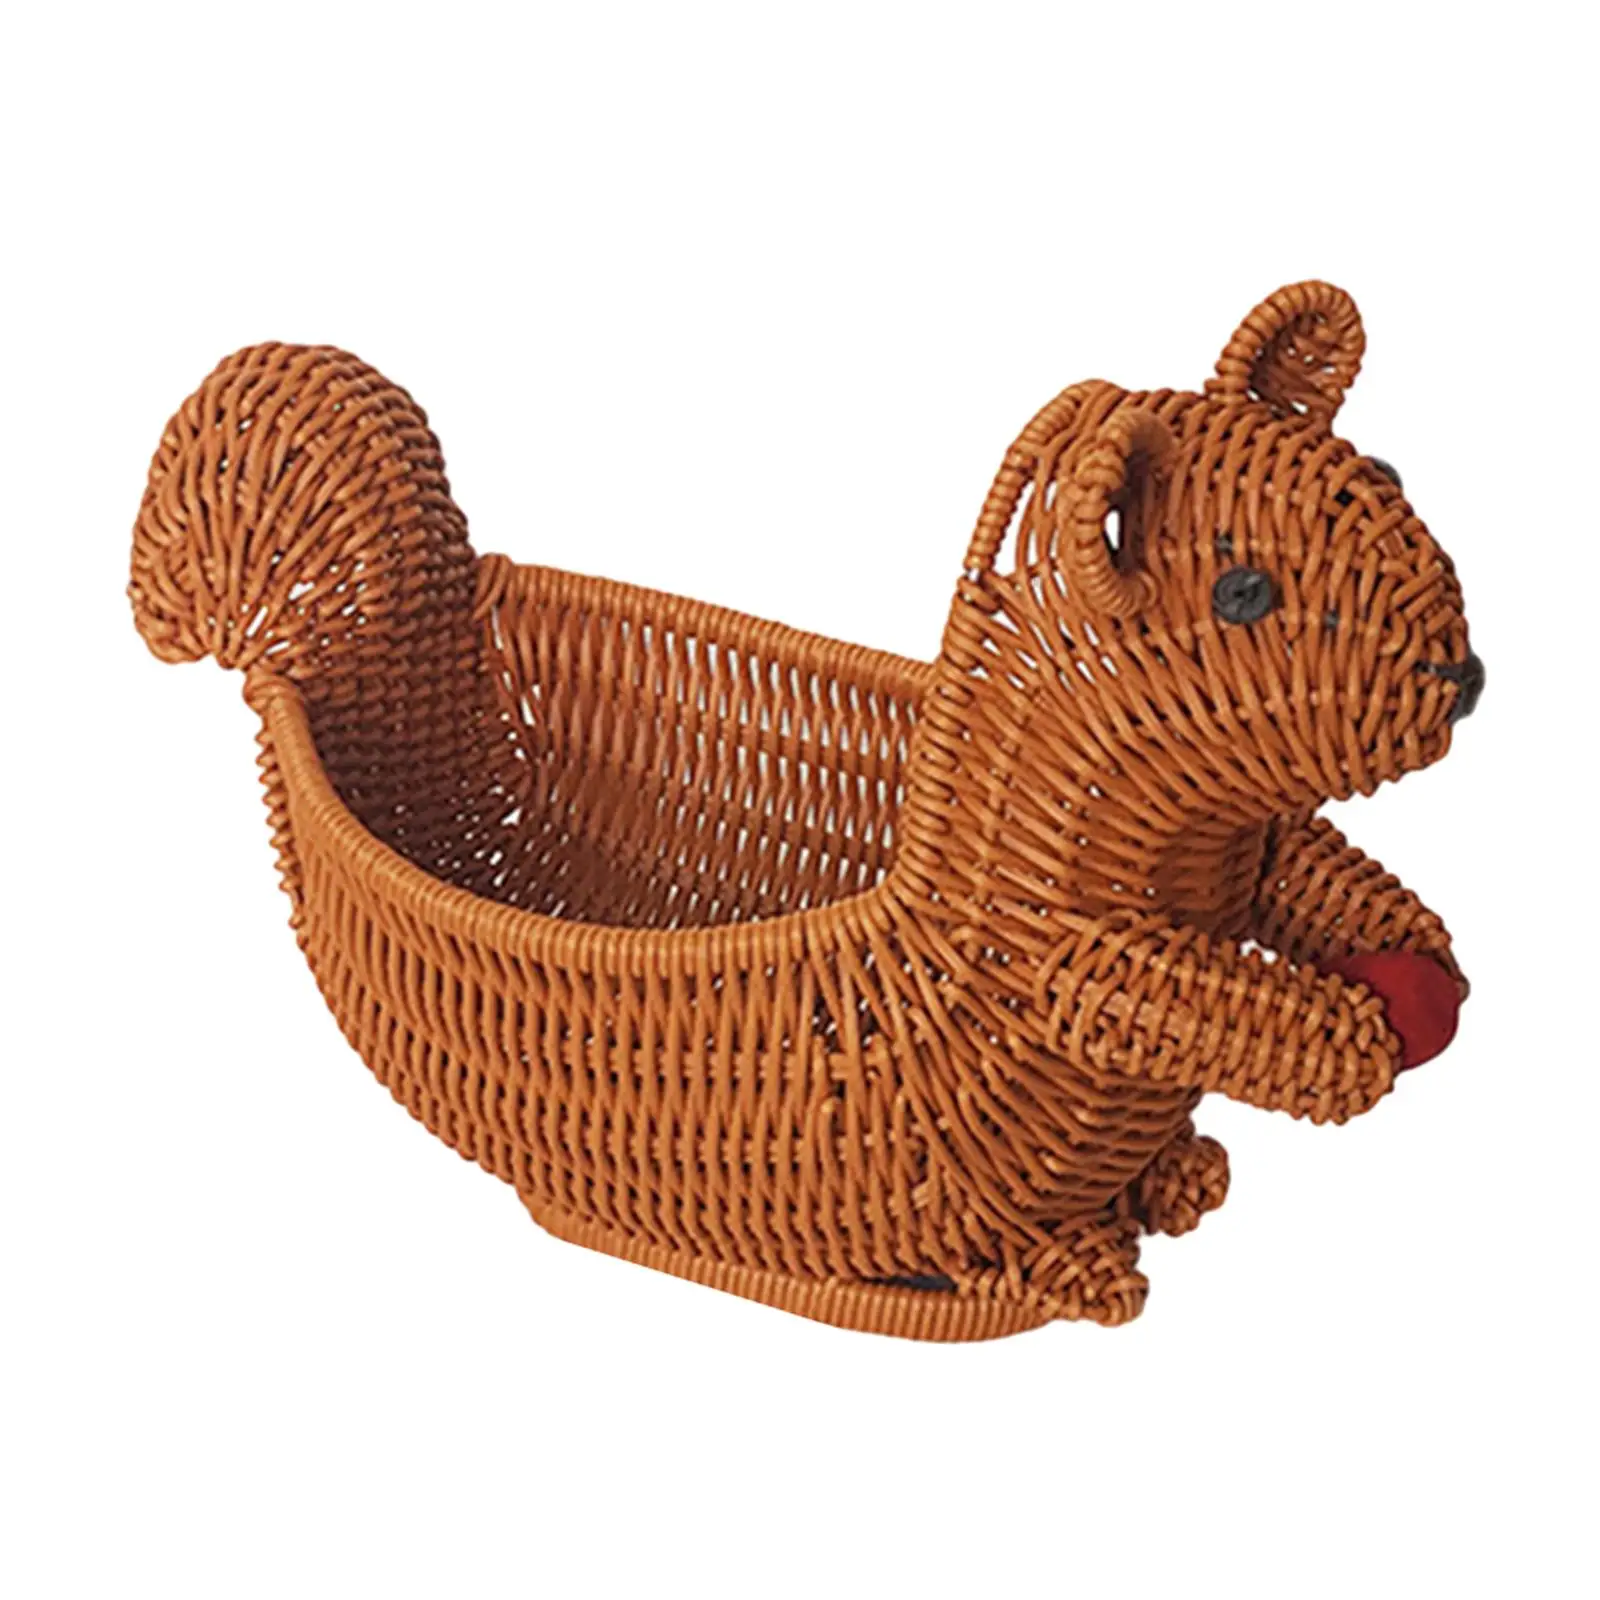 Fruit Basket Animal Shaped Bread Basket Multifunctional Picnic Basket Handmade